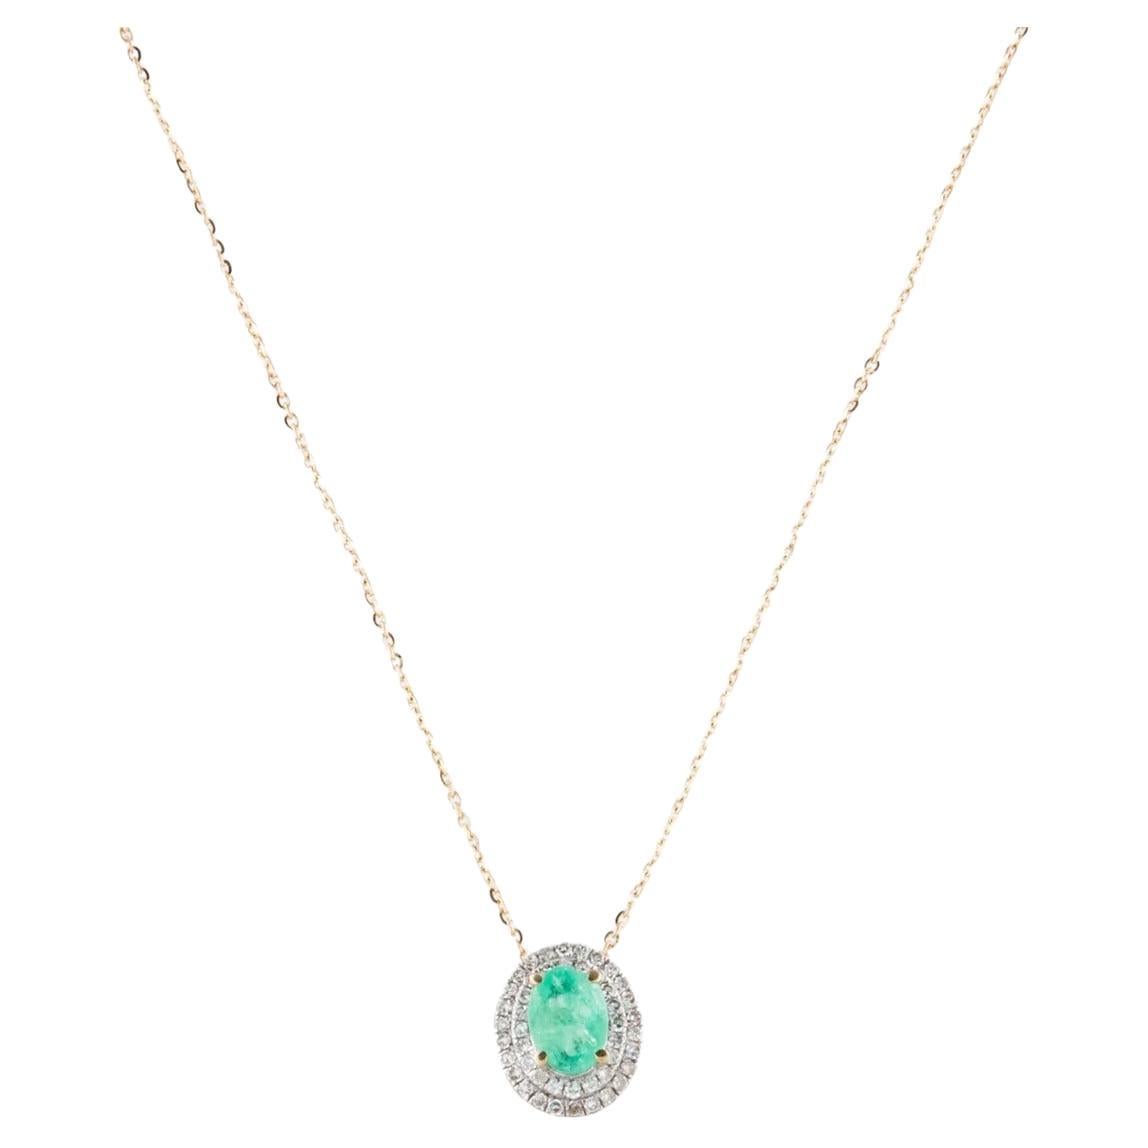 Designer 14K Emerald & Diamond Pendant Necklace, Gemstone Statement Jewelry For Sale